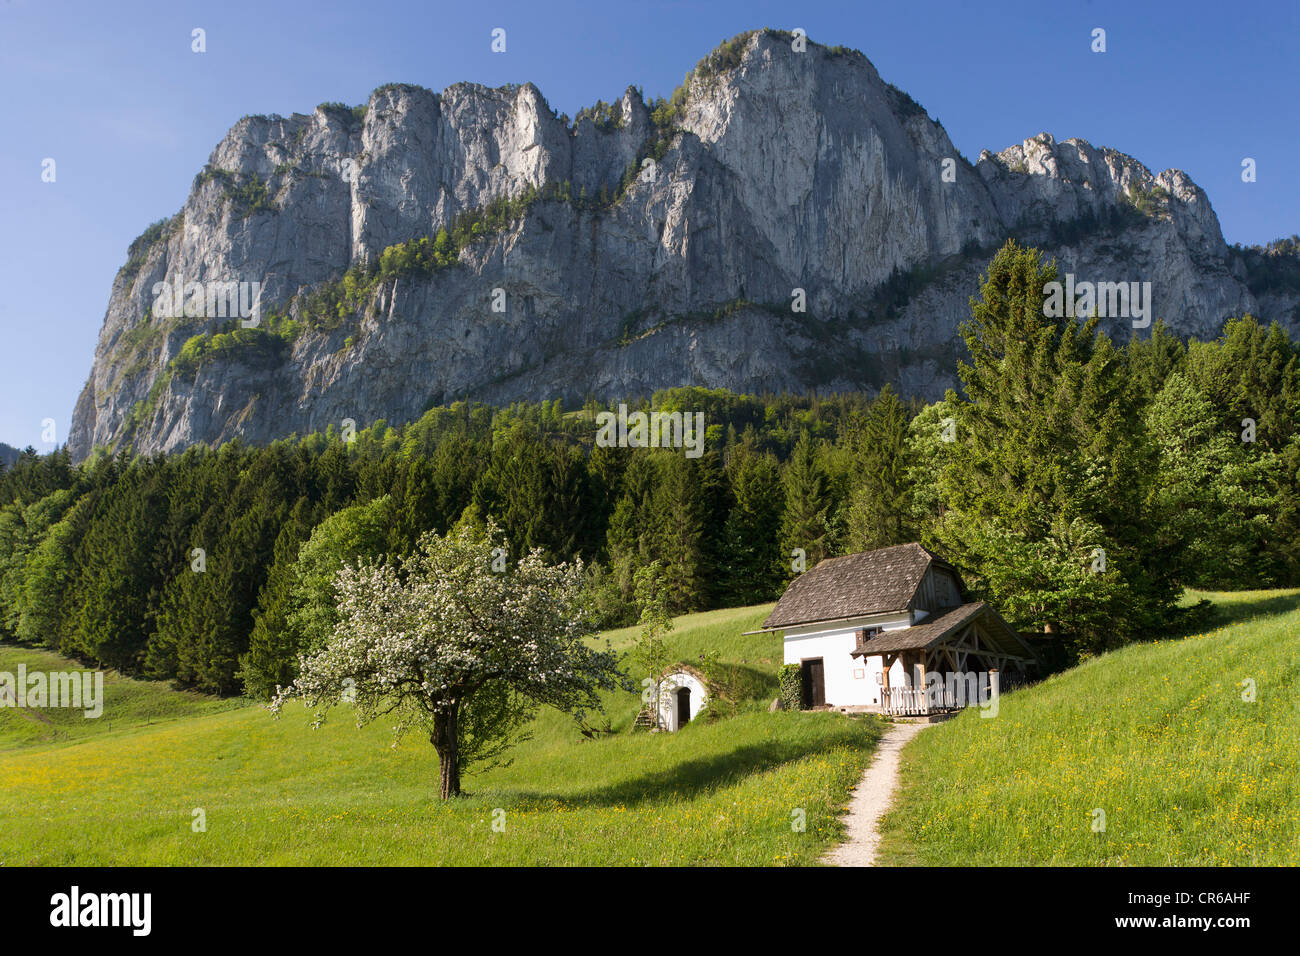 Austria, Salzkammergut, Mondseeland, Vista del molino en frente de la montaña Drachenwand Foto de stock